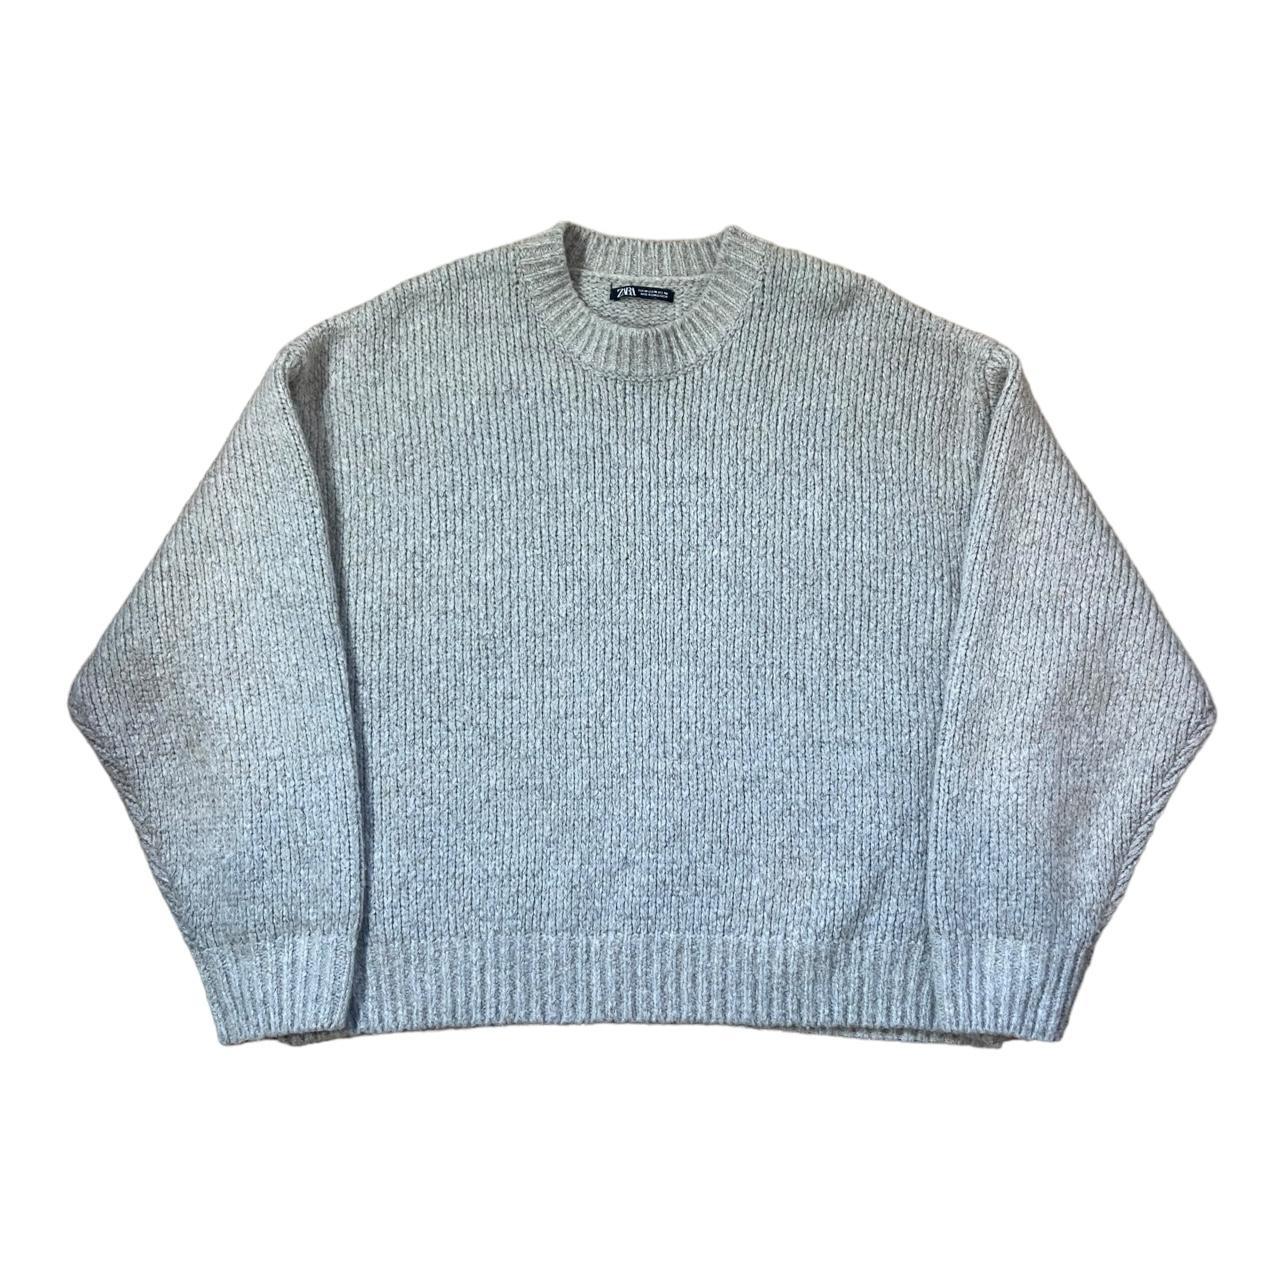 Zara cream knit jumper Size Medium (Boxy... - Depop